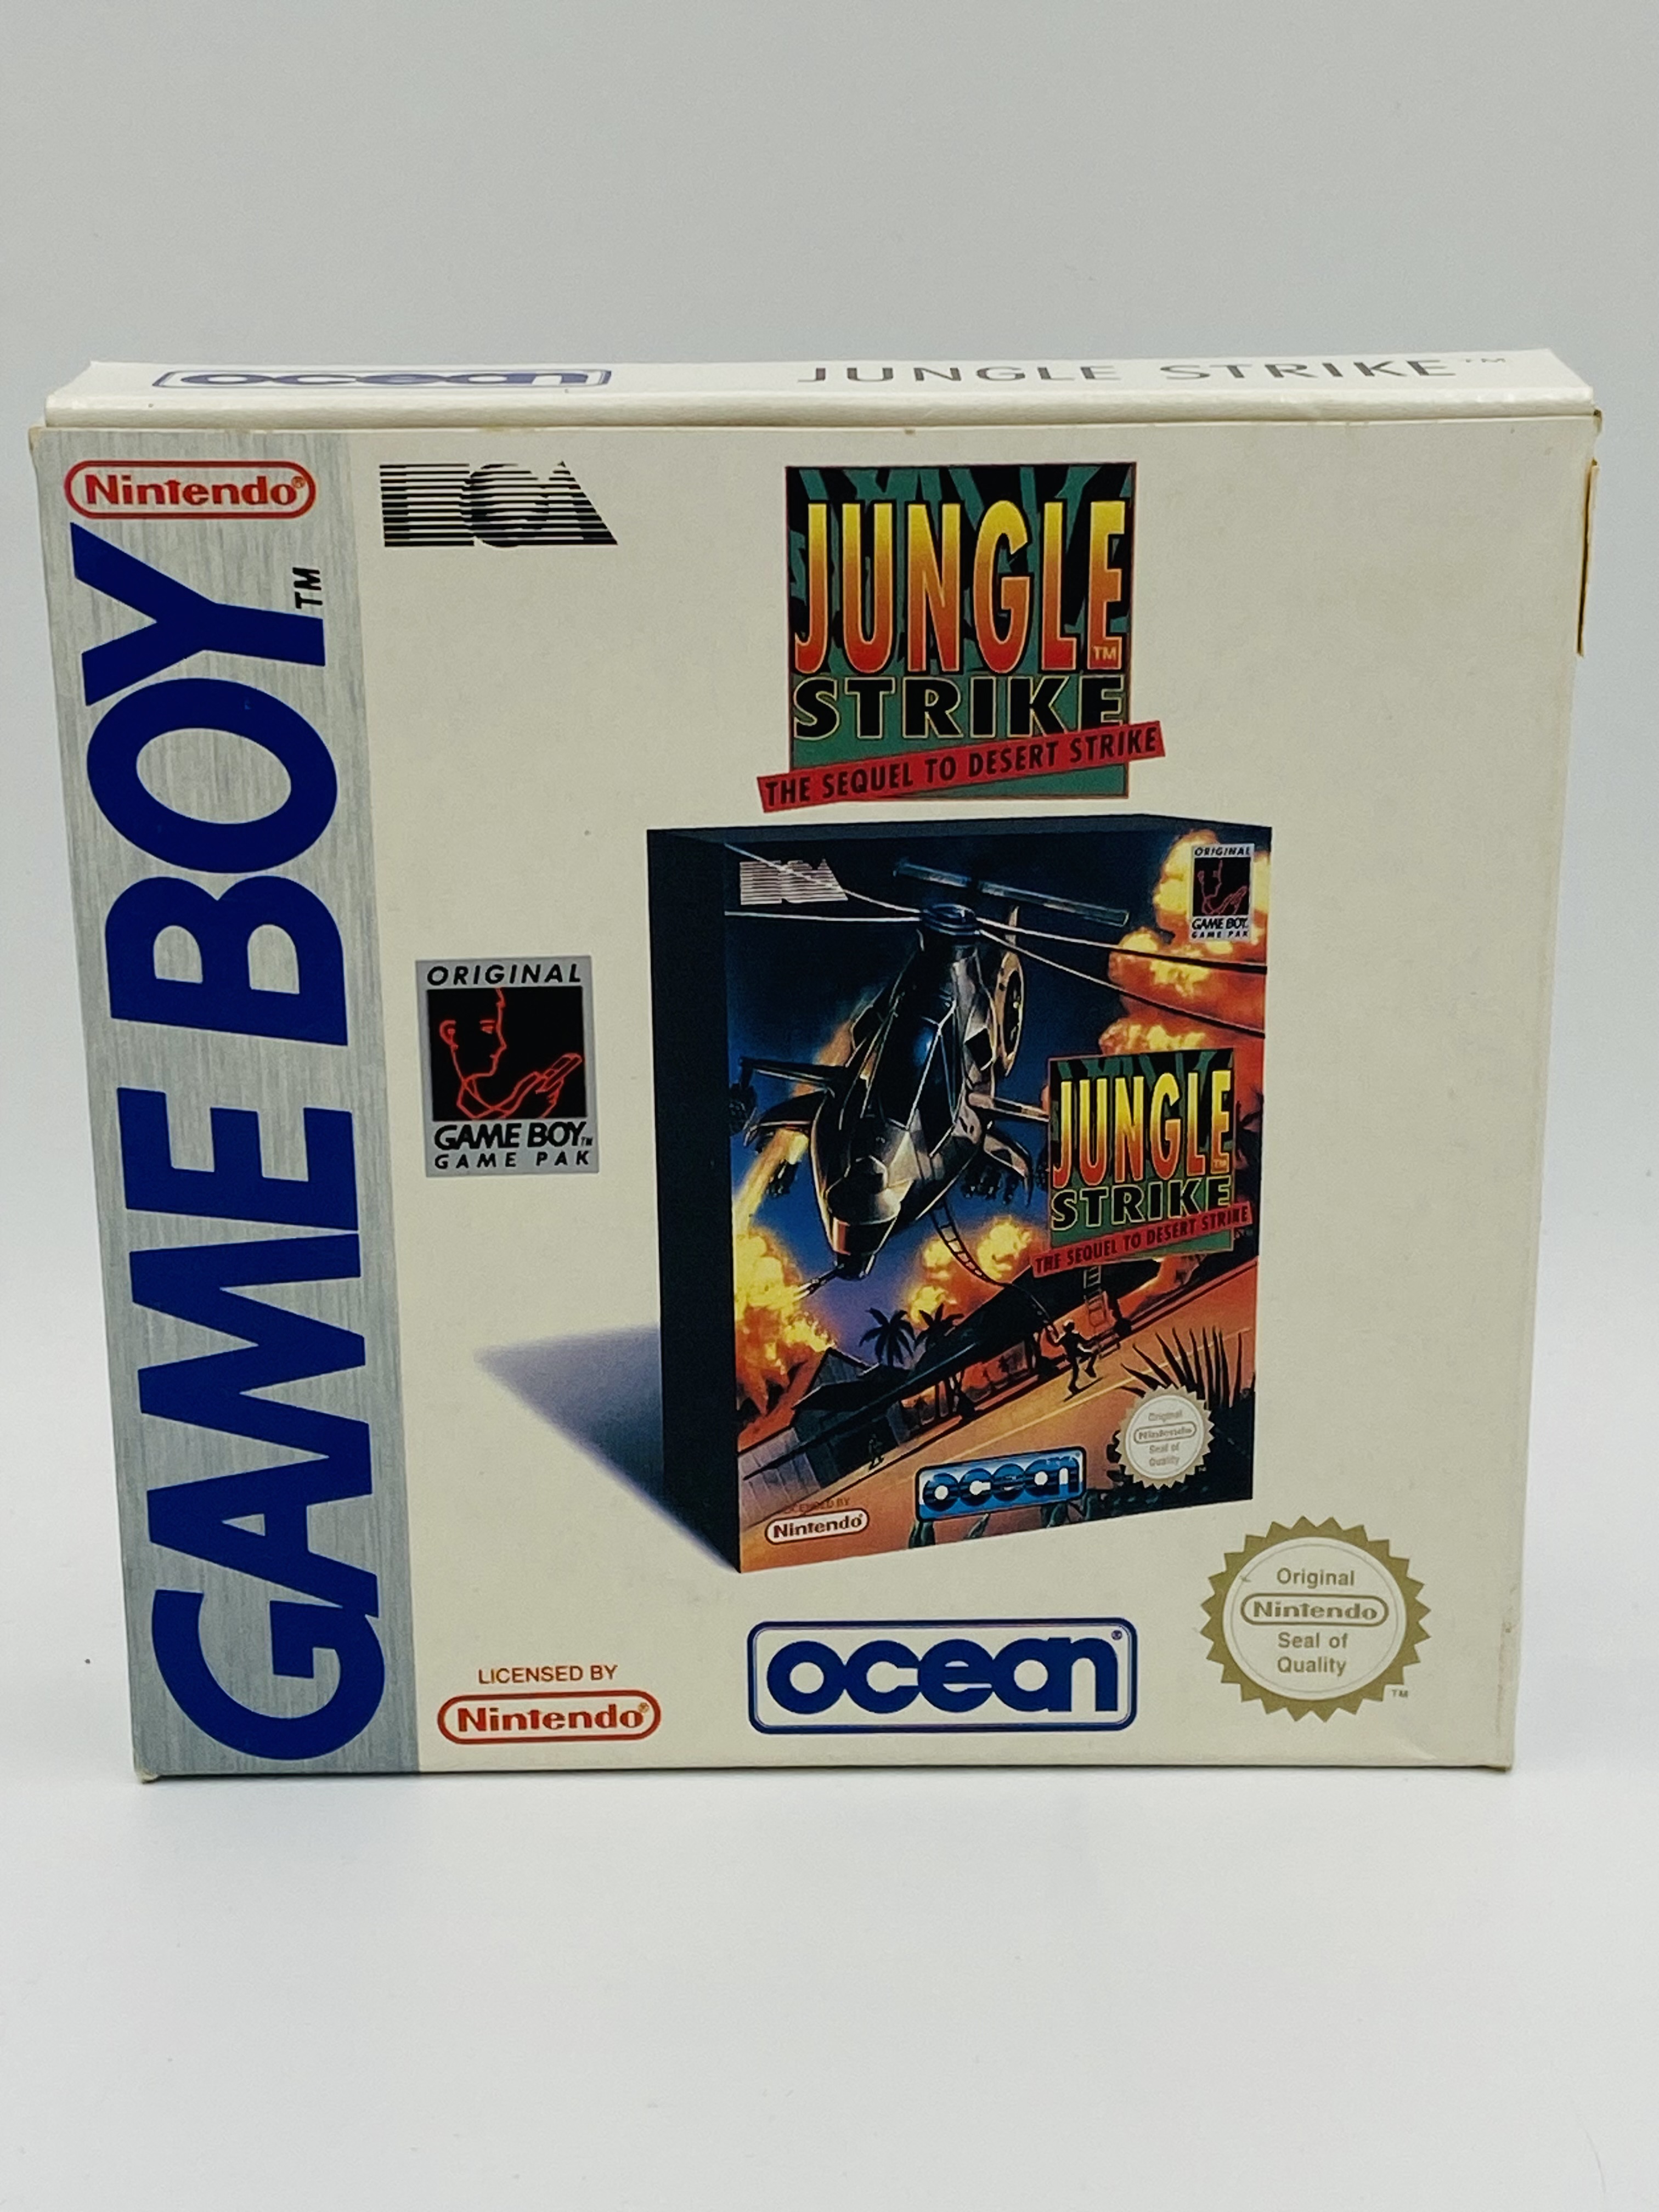 Nintendo Game Boy Jungle Strike, boxed